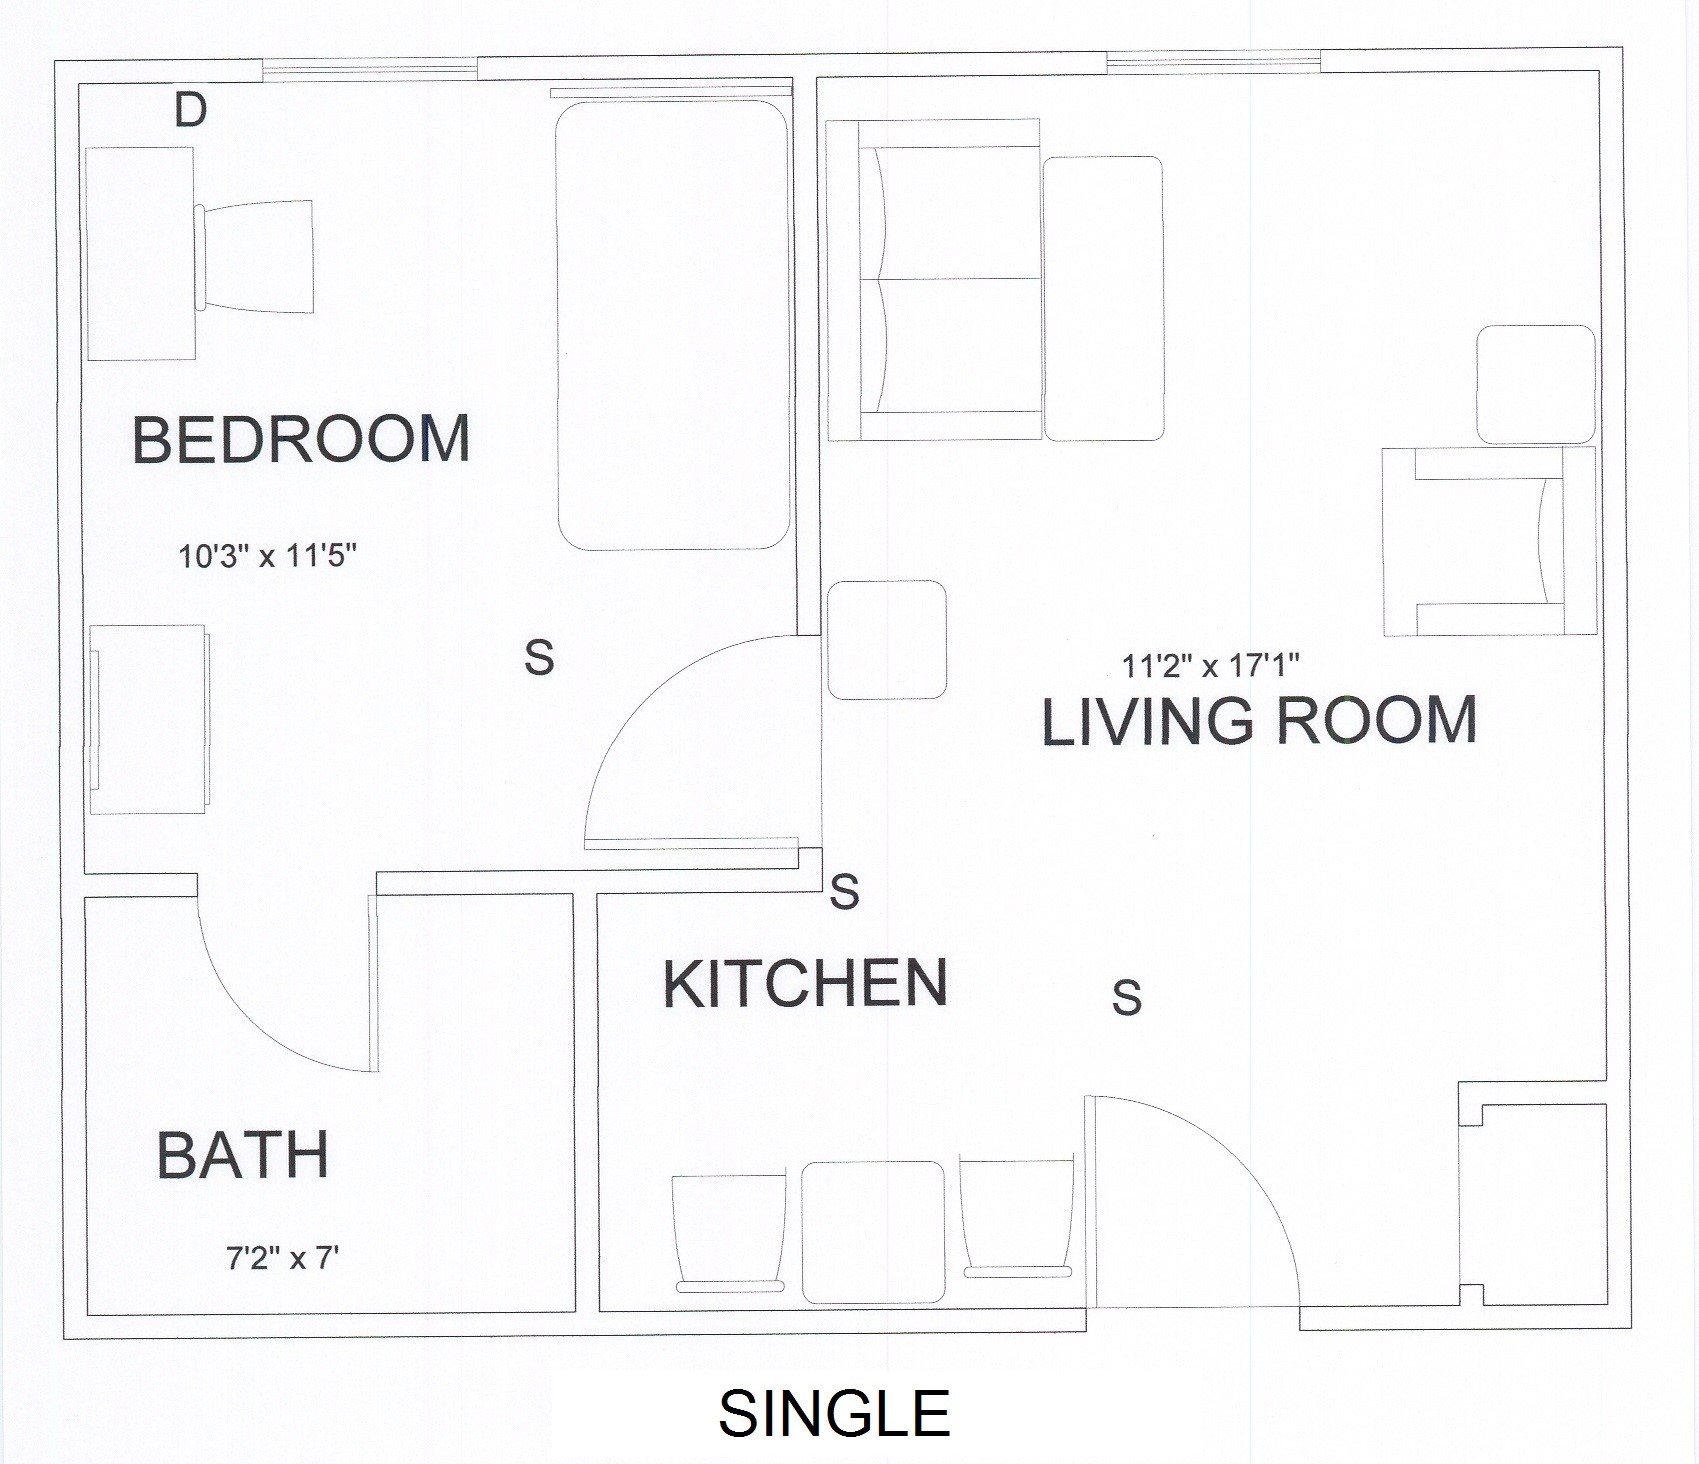 Single floor plan